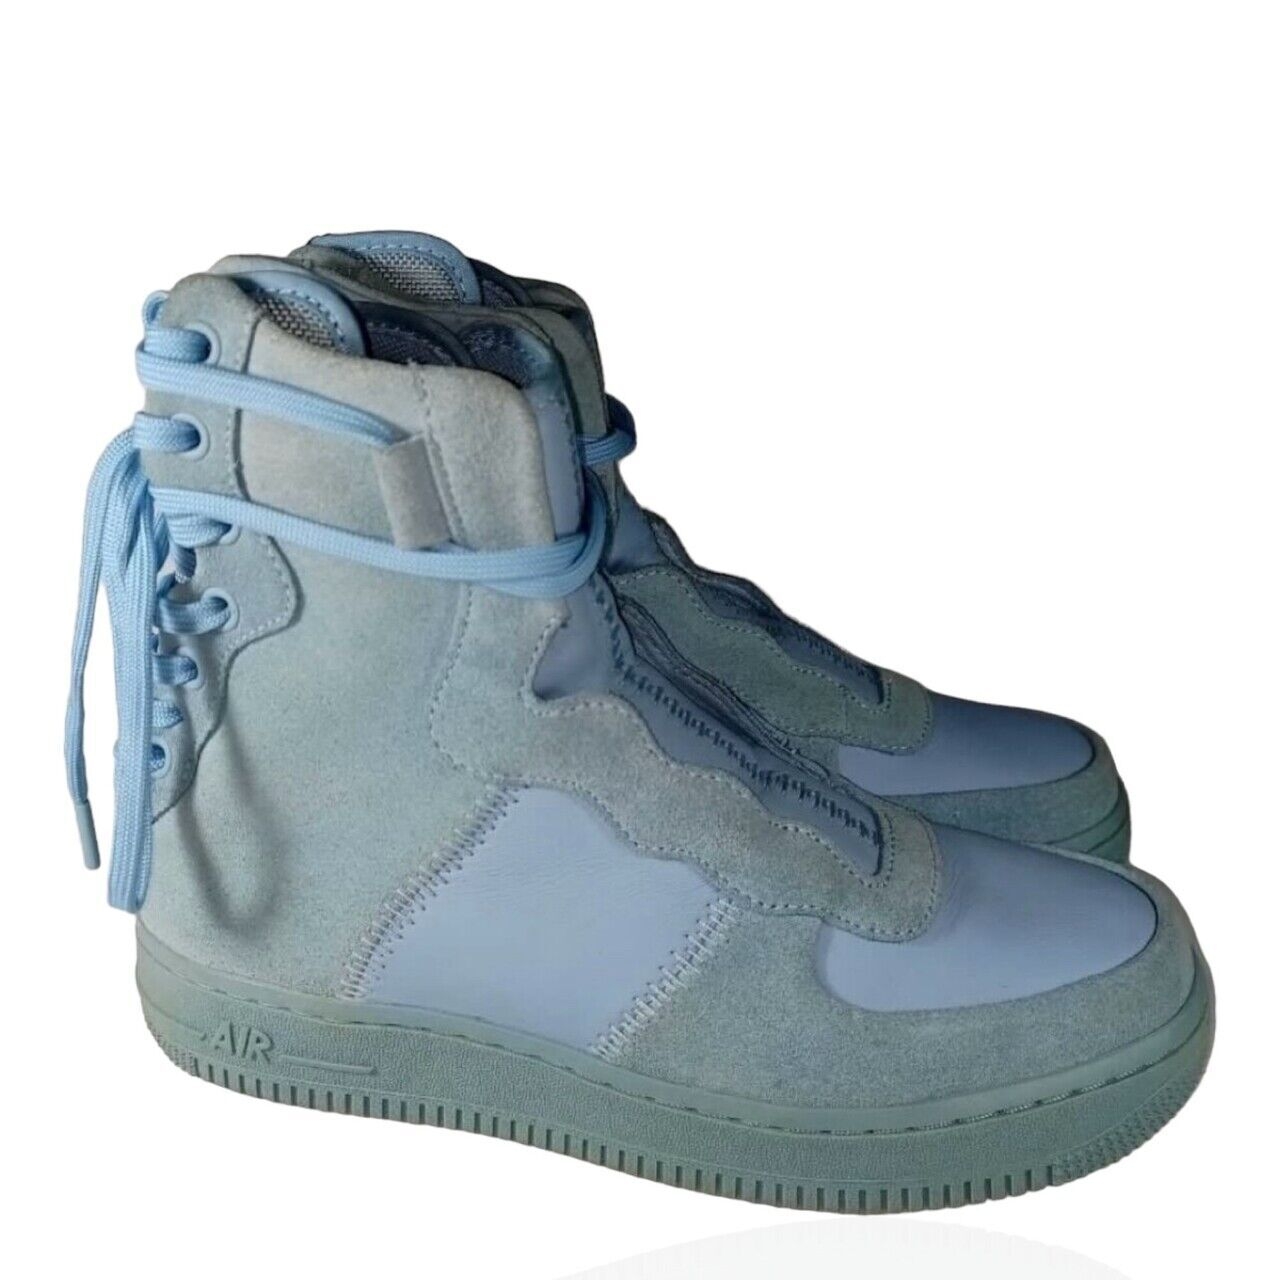 Nike AF1 Rebel XX A01525-400 Blue Boots